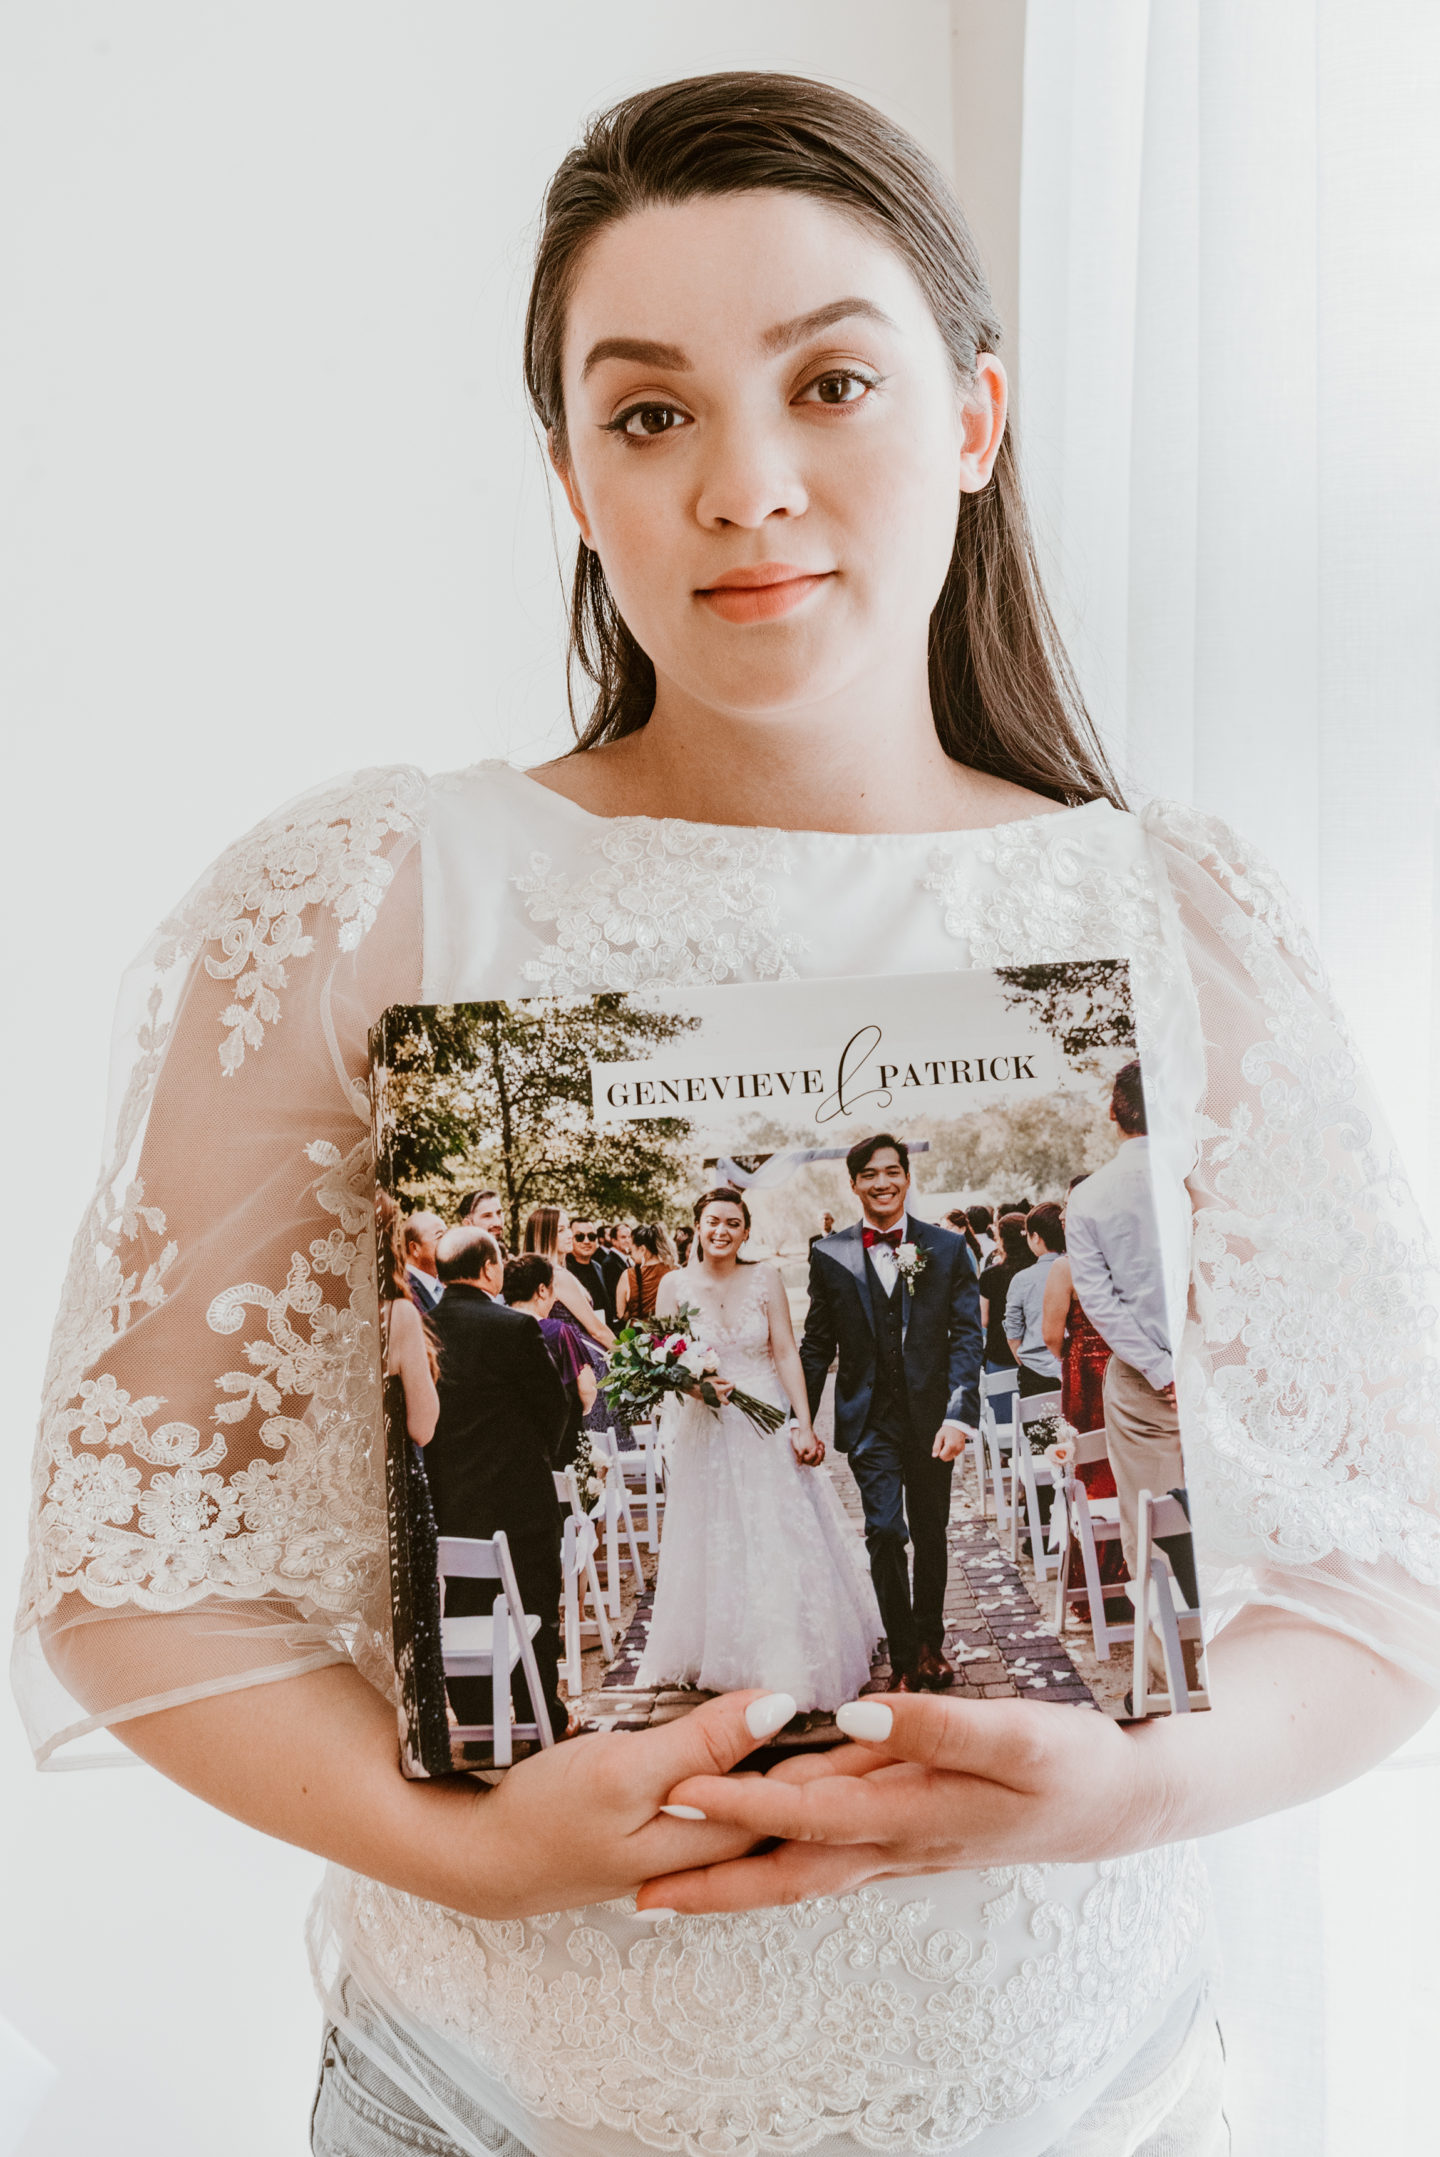 Design Your Own Wedding Album With Printique